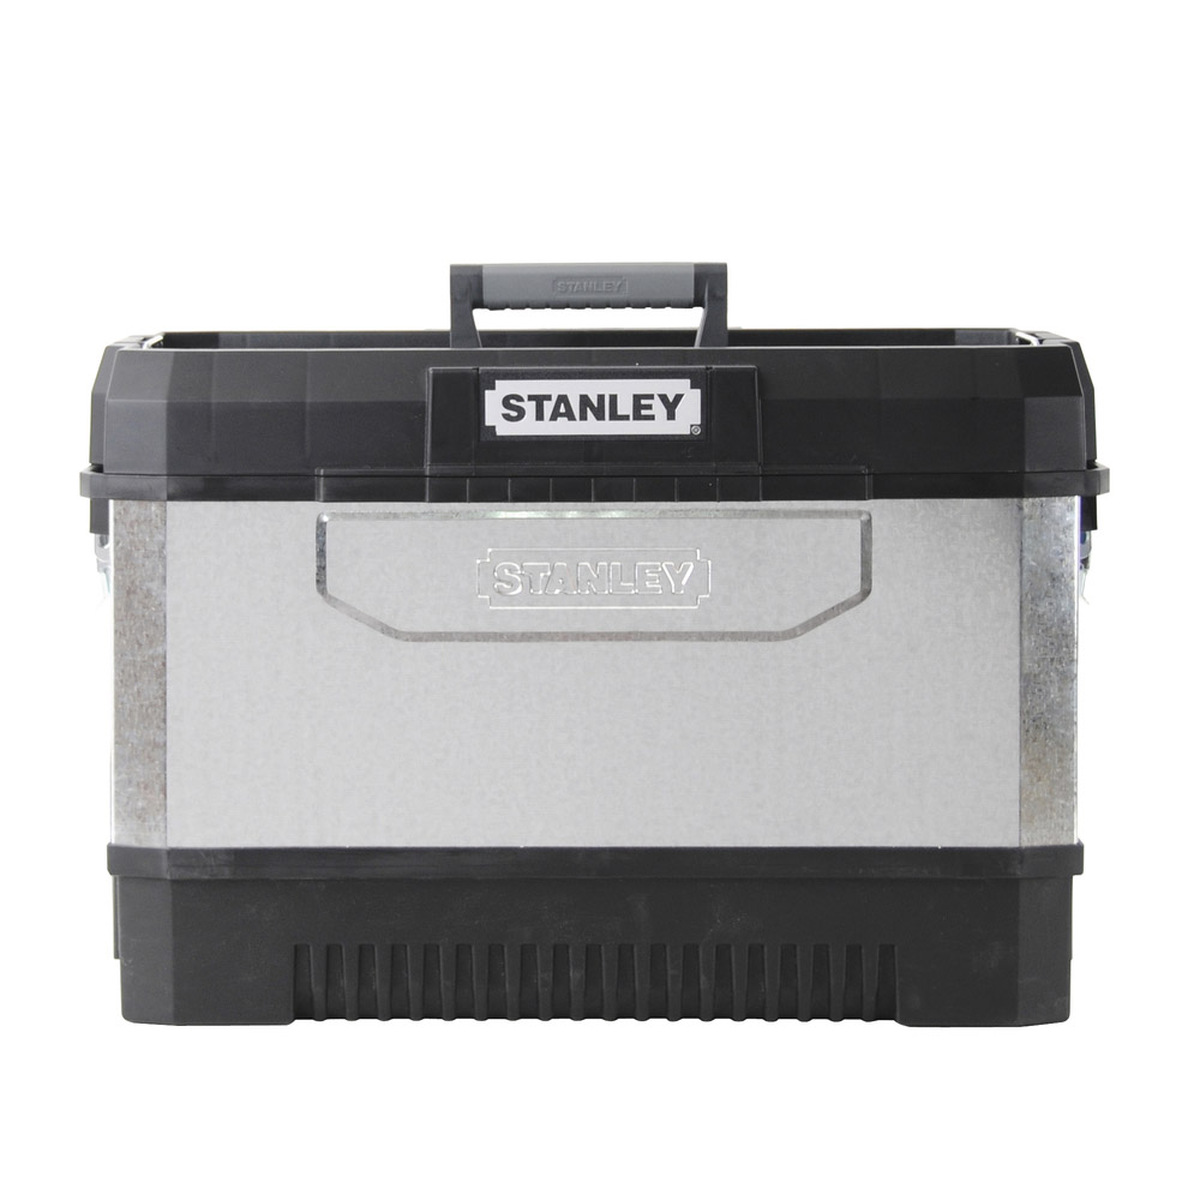 Ящик для инструмента STANLEY с колесами 1-95-828 — Фото 1